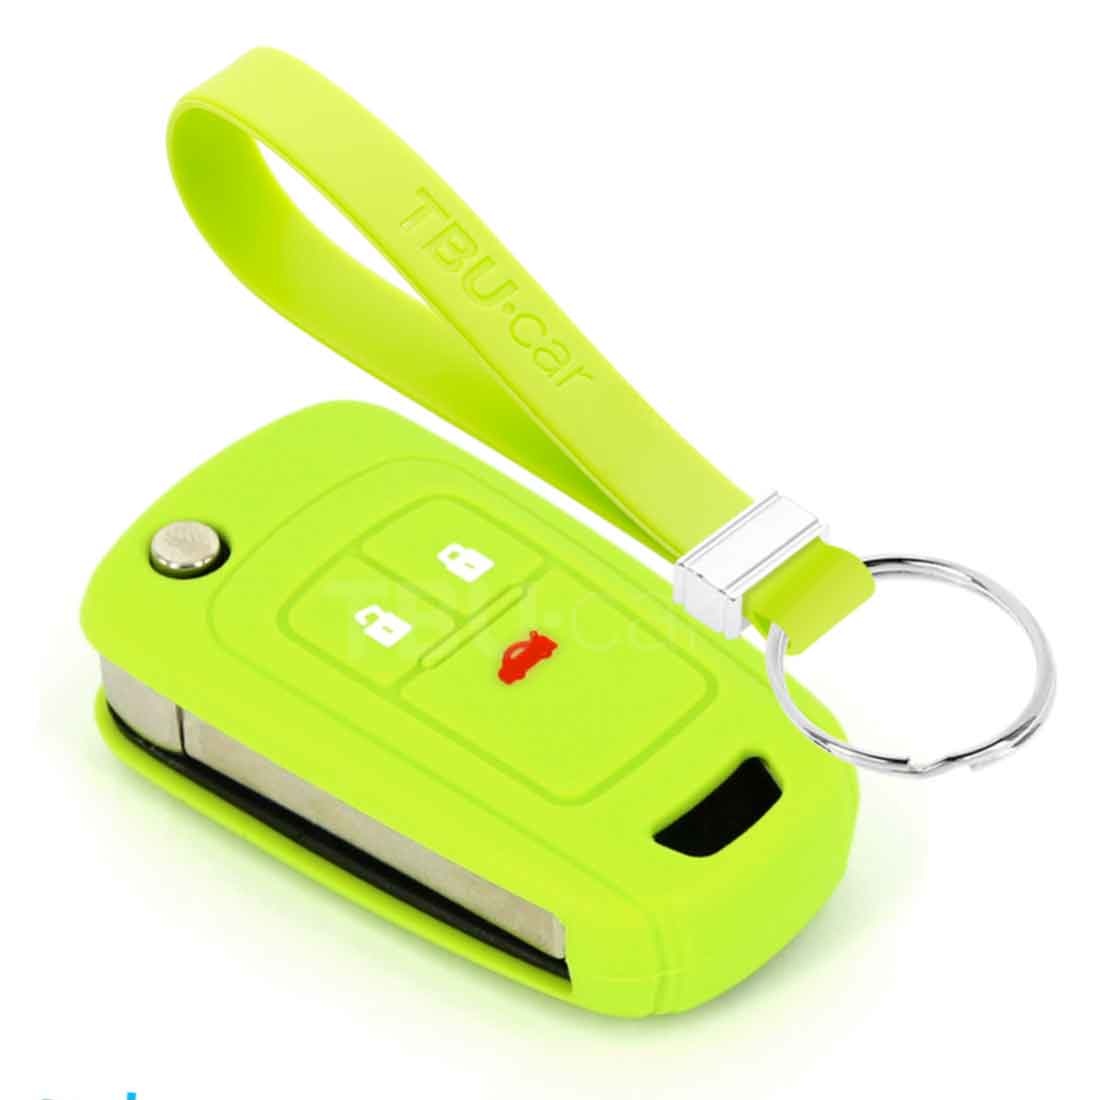 TBU car TBU car Sleutel cover compatibel met Vauxhall - Silicone sleutelhoesje - beschermhoesje autosleutel - Lime groen